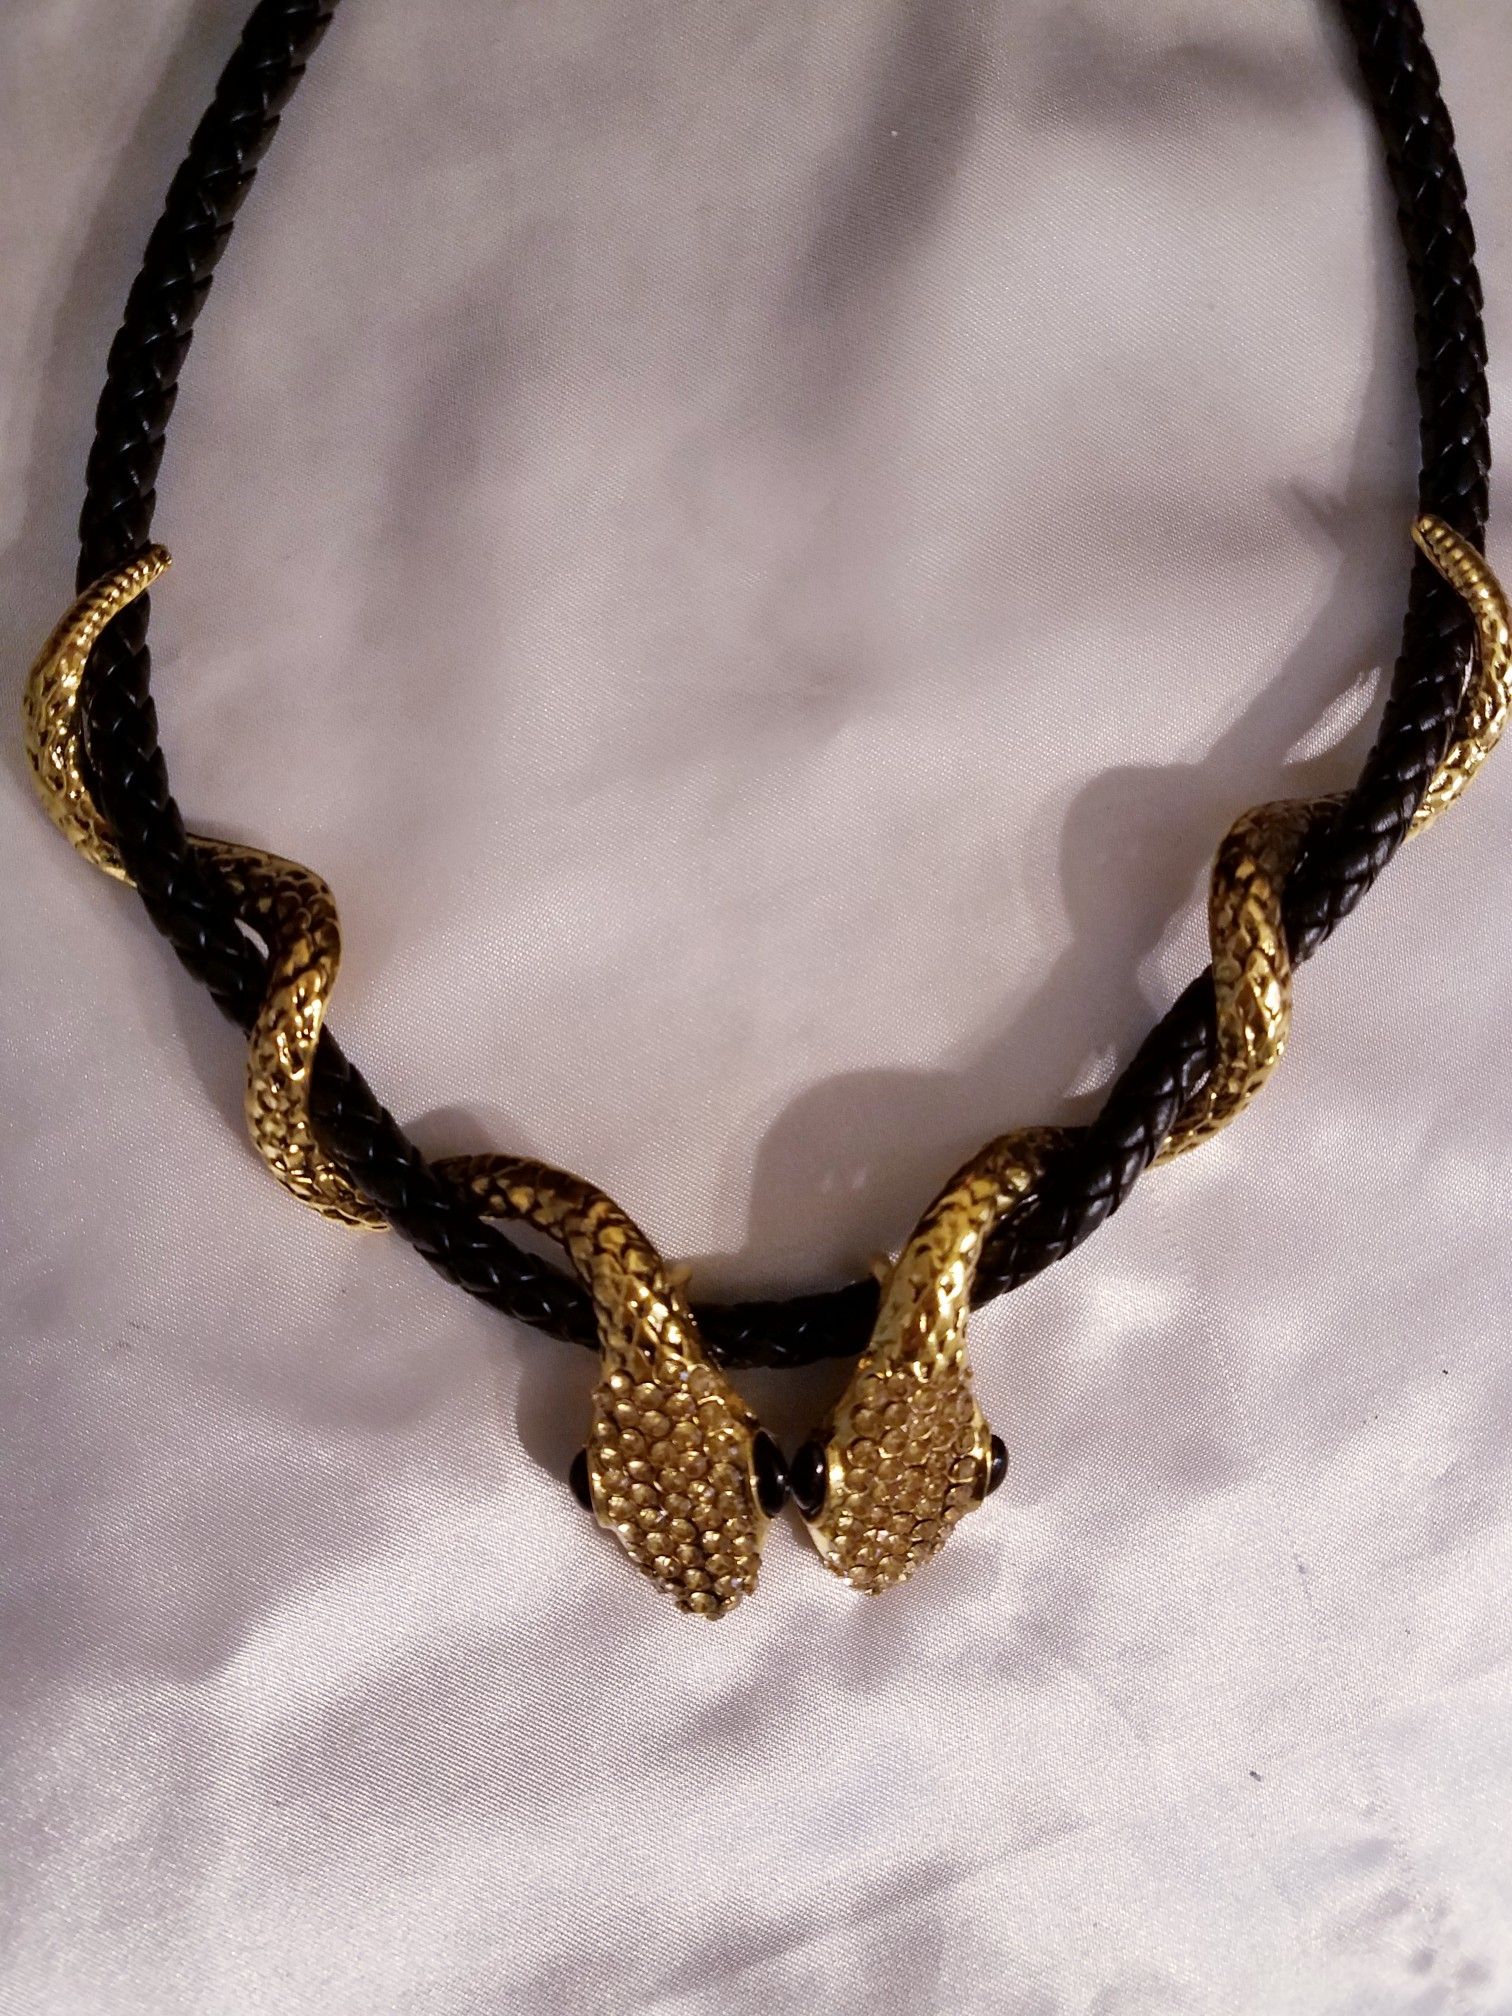 Sparkling Crystal and leather adjustable snake necklace